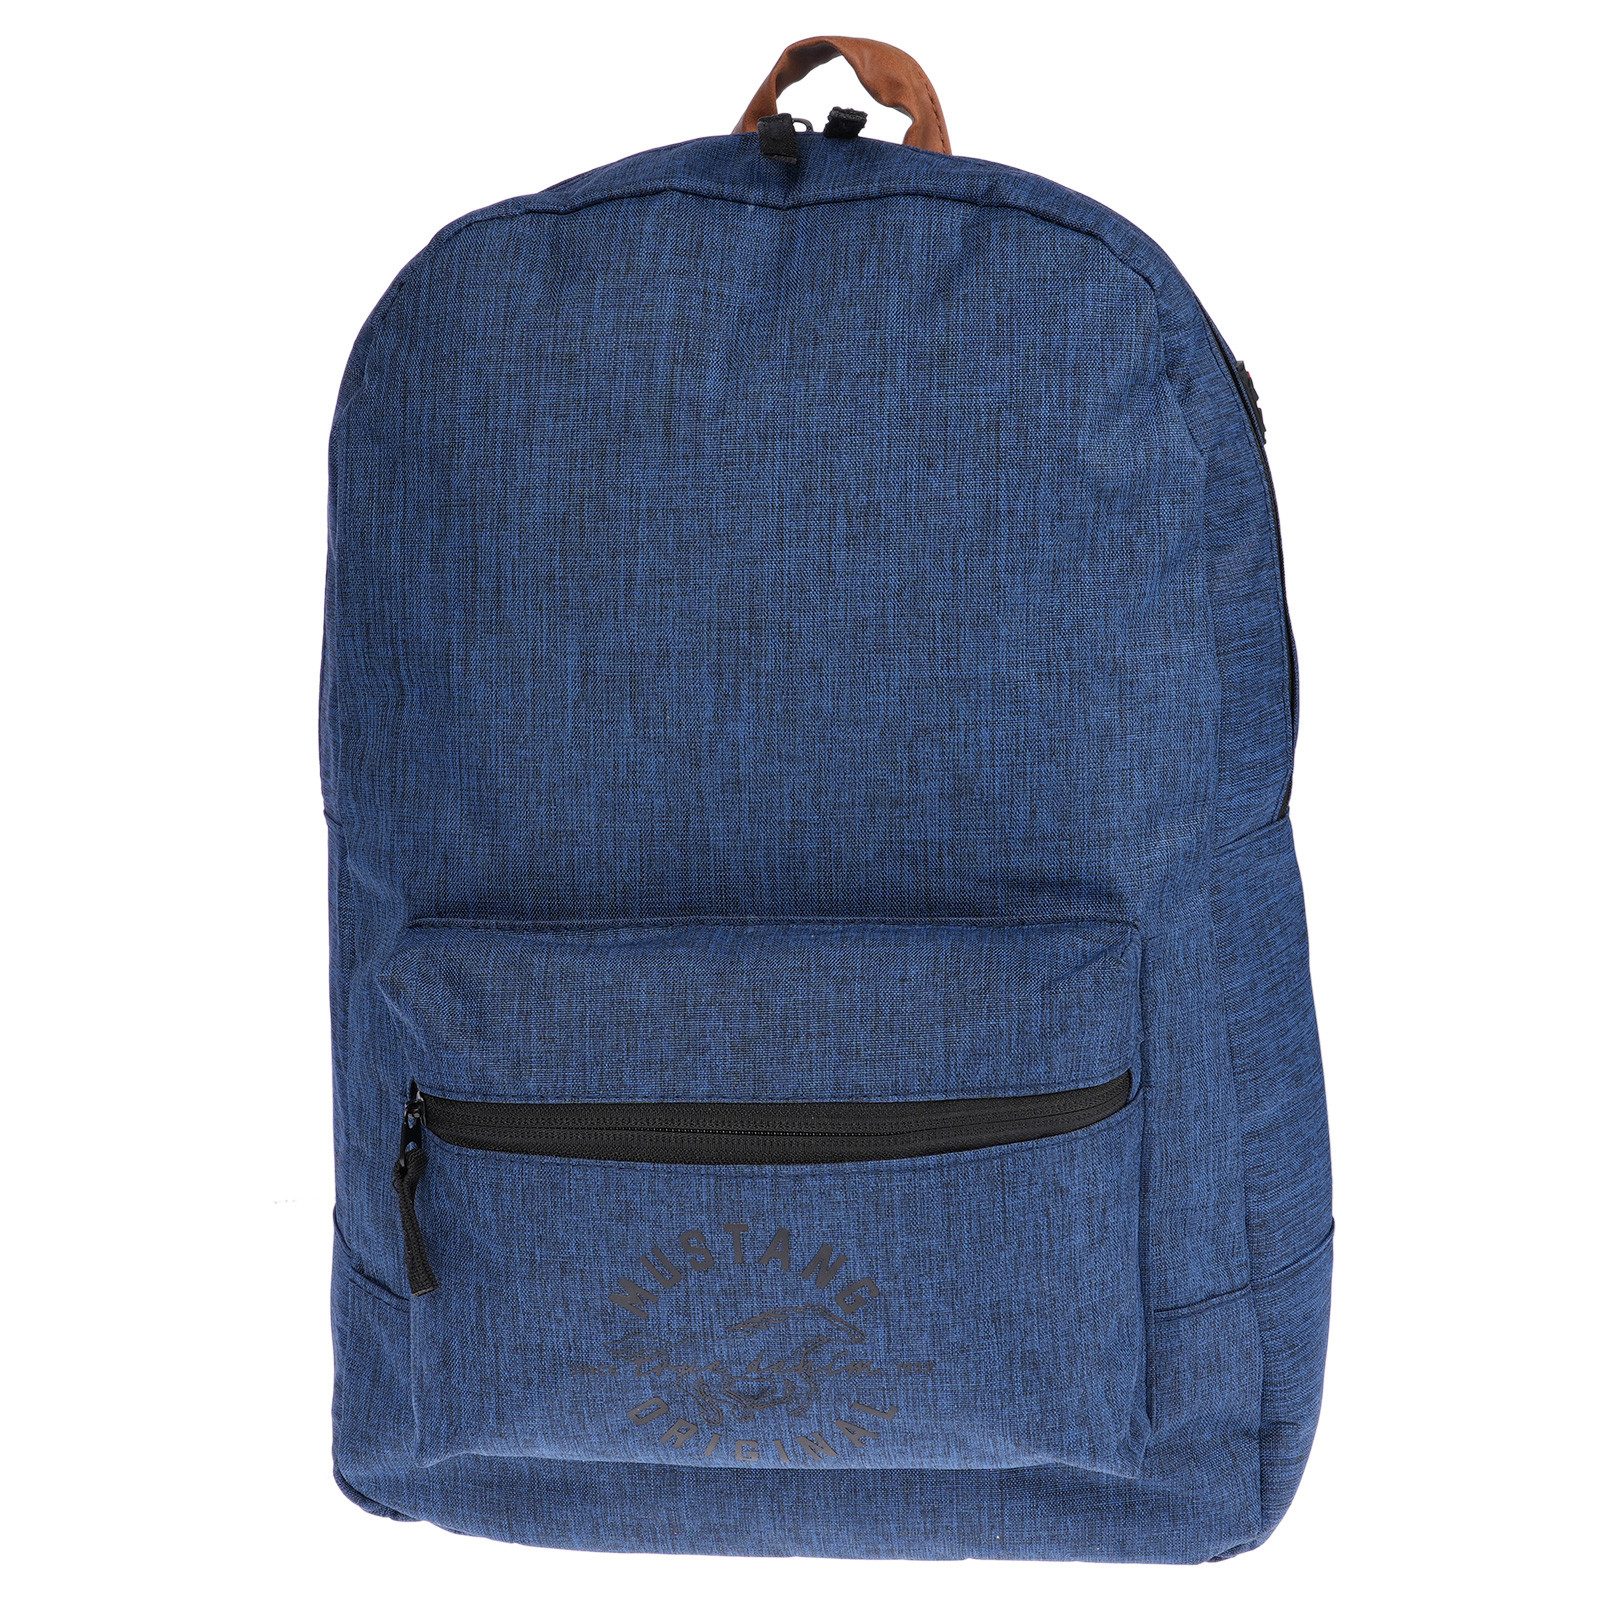 MUSTANG Shopper Mustang Rucksack Backpack Blau, wasserabweisend